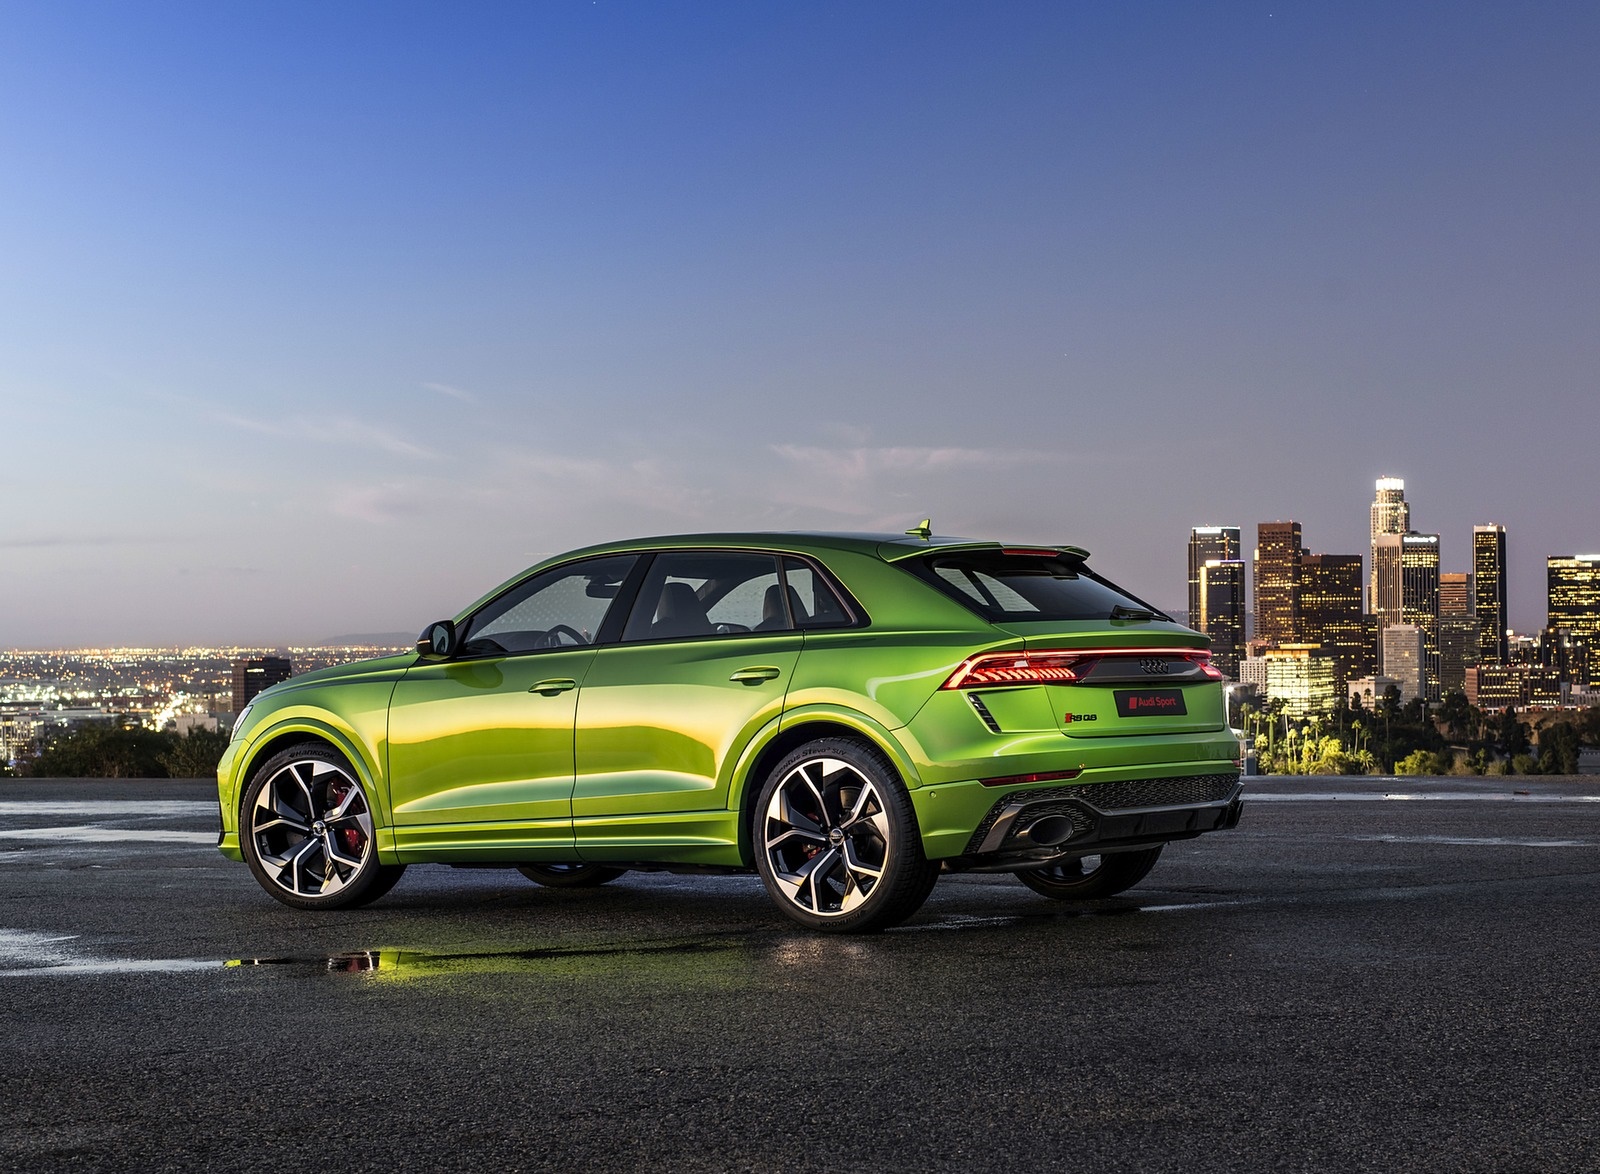 2020 Audi RS Q8 (Color: Java Green) Rear Three-Quarter Wallpapers #34 of 196